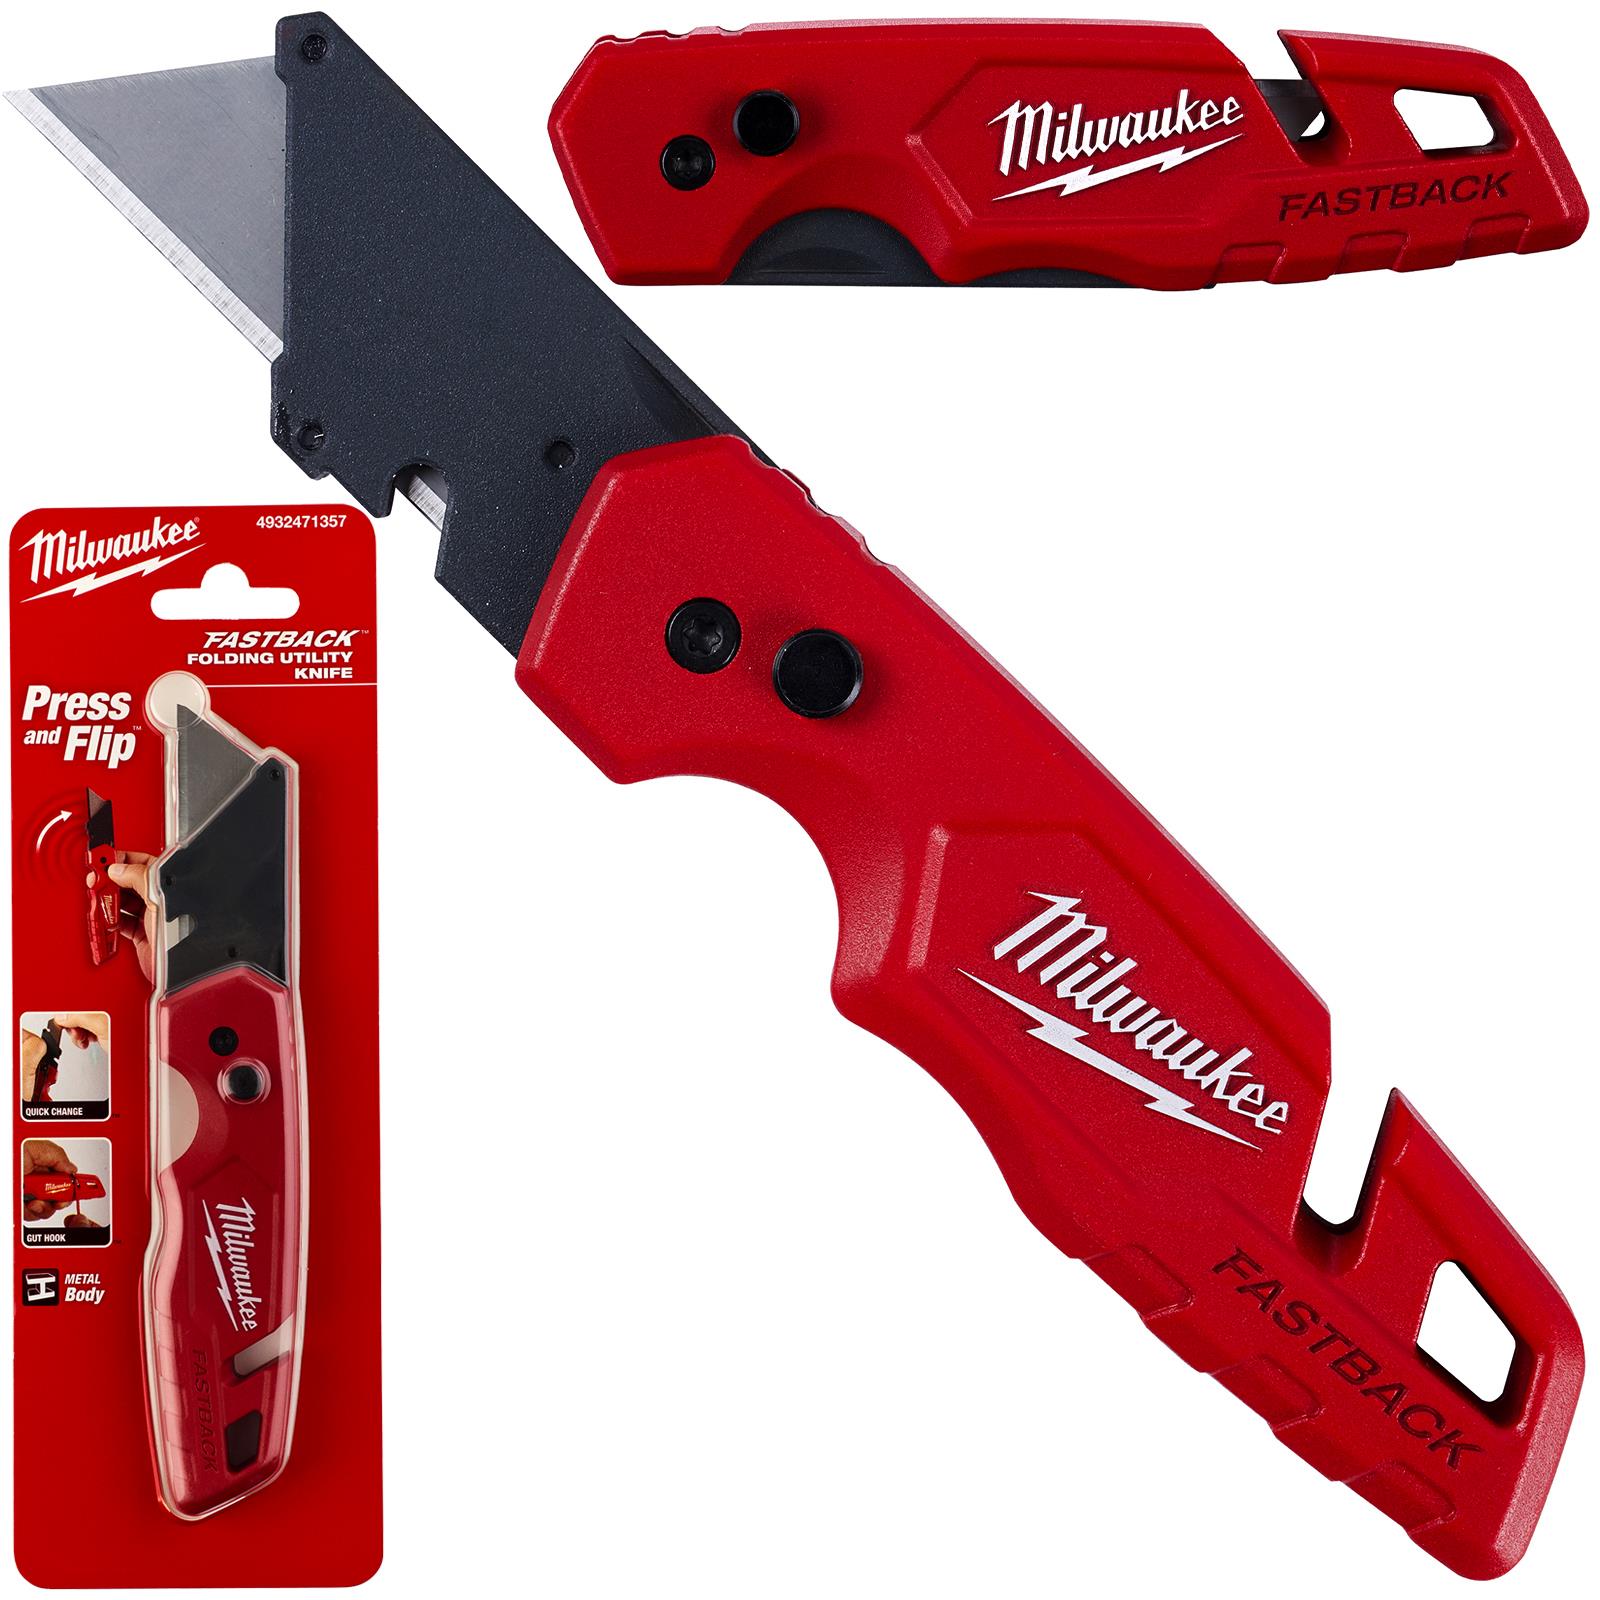 Milwaukee FASTBACK Flip Utility Knife Blade Cutter Cutting